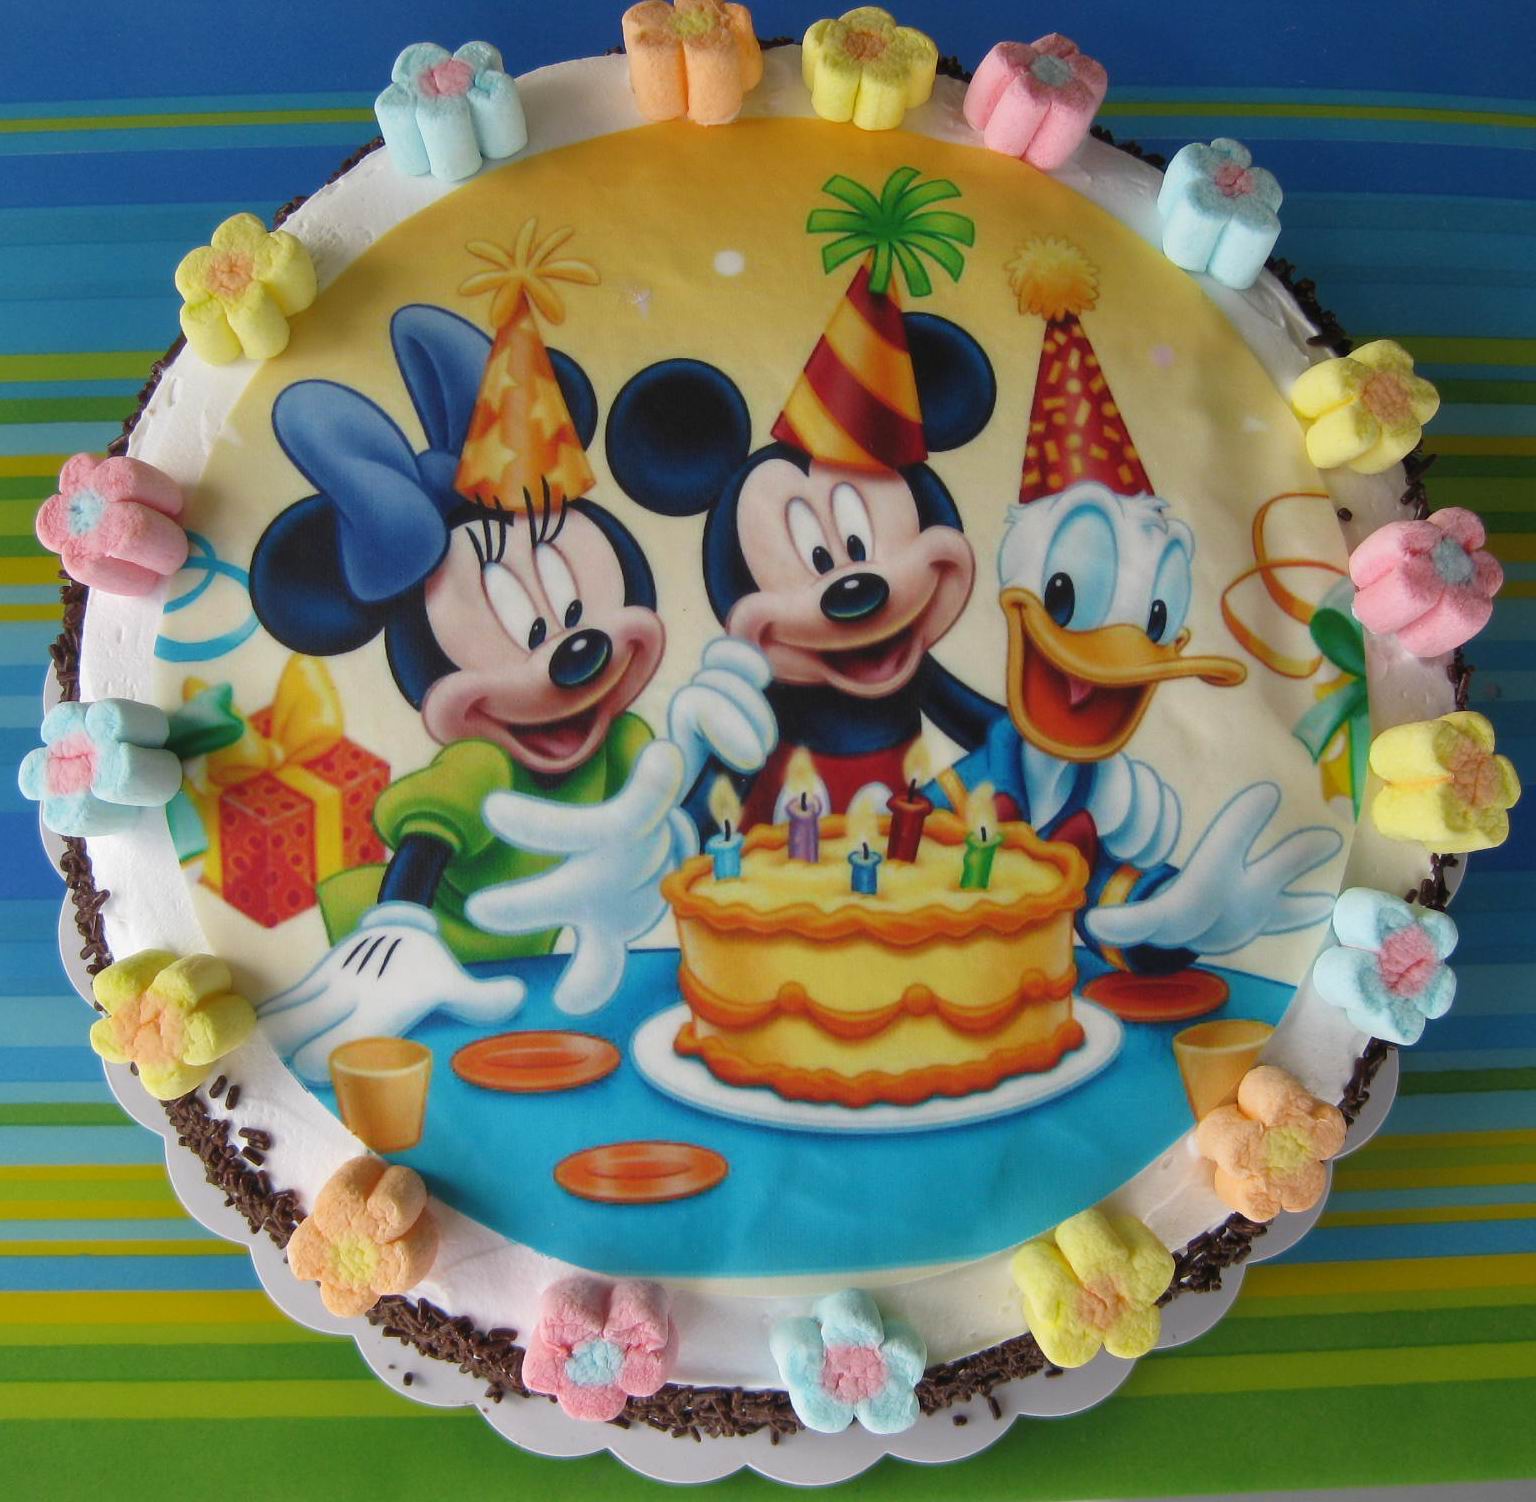 Connie's Home Sweets: 產品編號: A2862 Mickey mouse cake米奇老鼠生日蛋糕birthday cake翻糖蛋糕 fondant cake